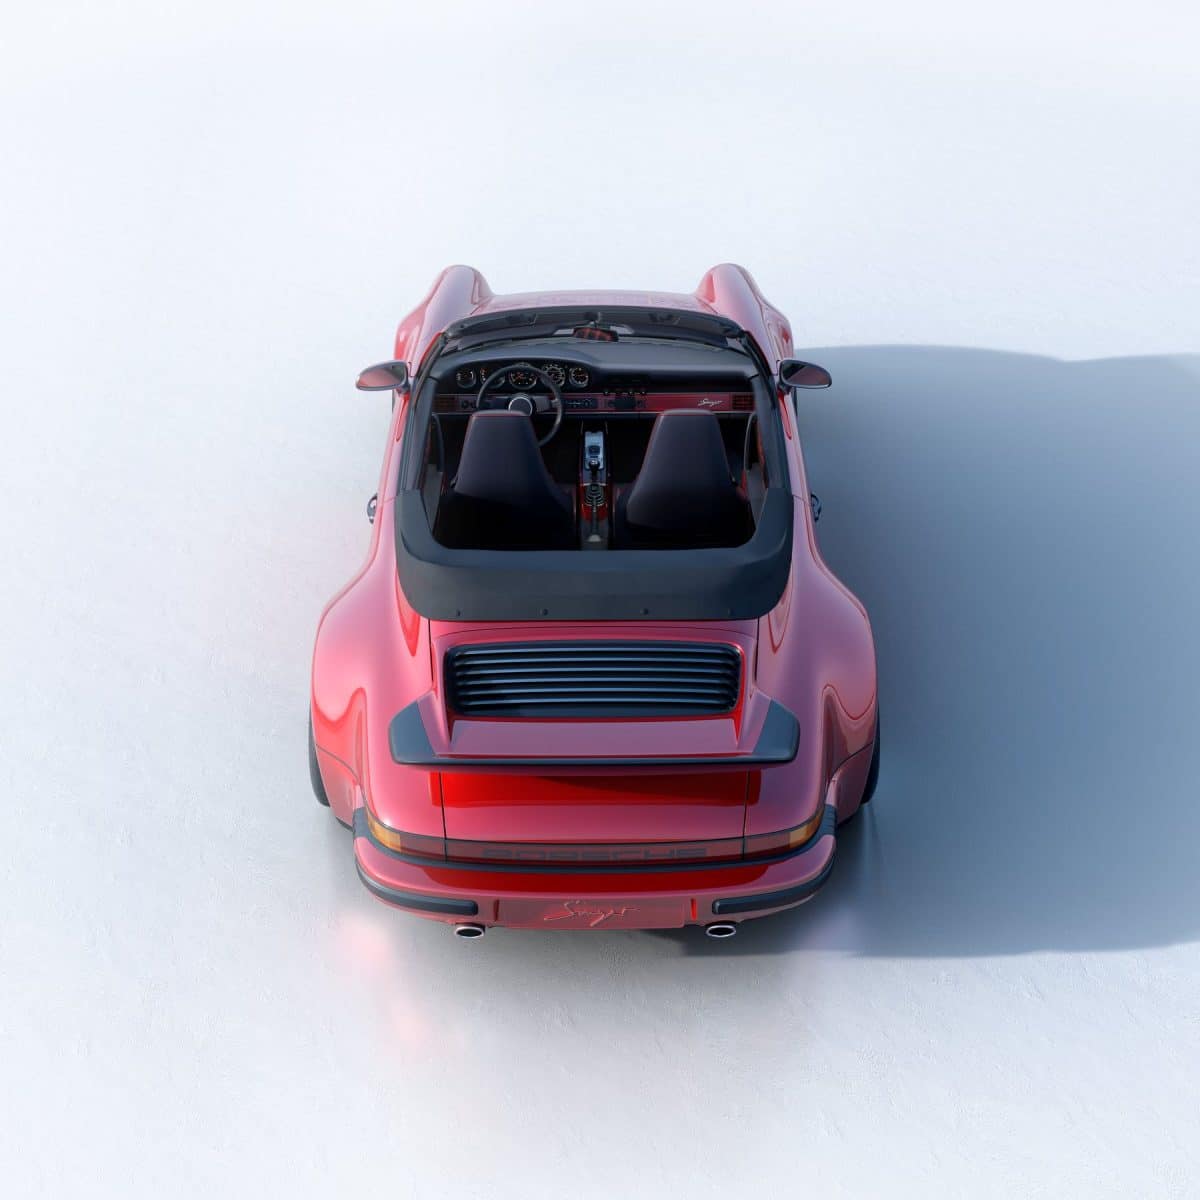 Porsche 911 Turbo Cabriolet reimagined by Singer 10